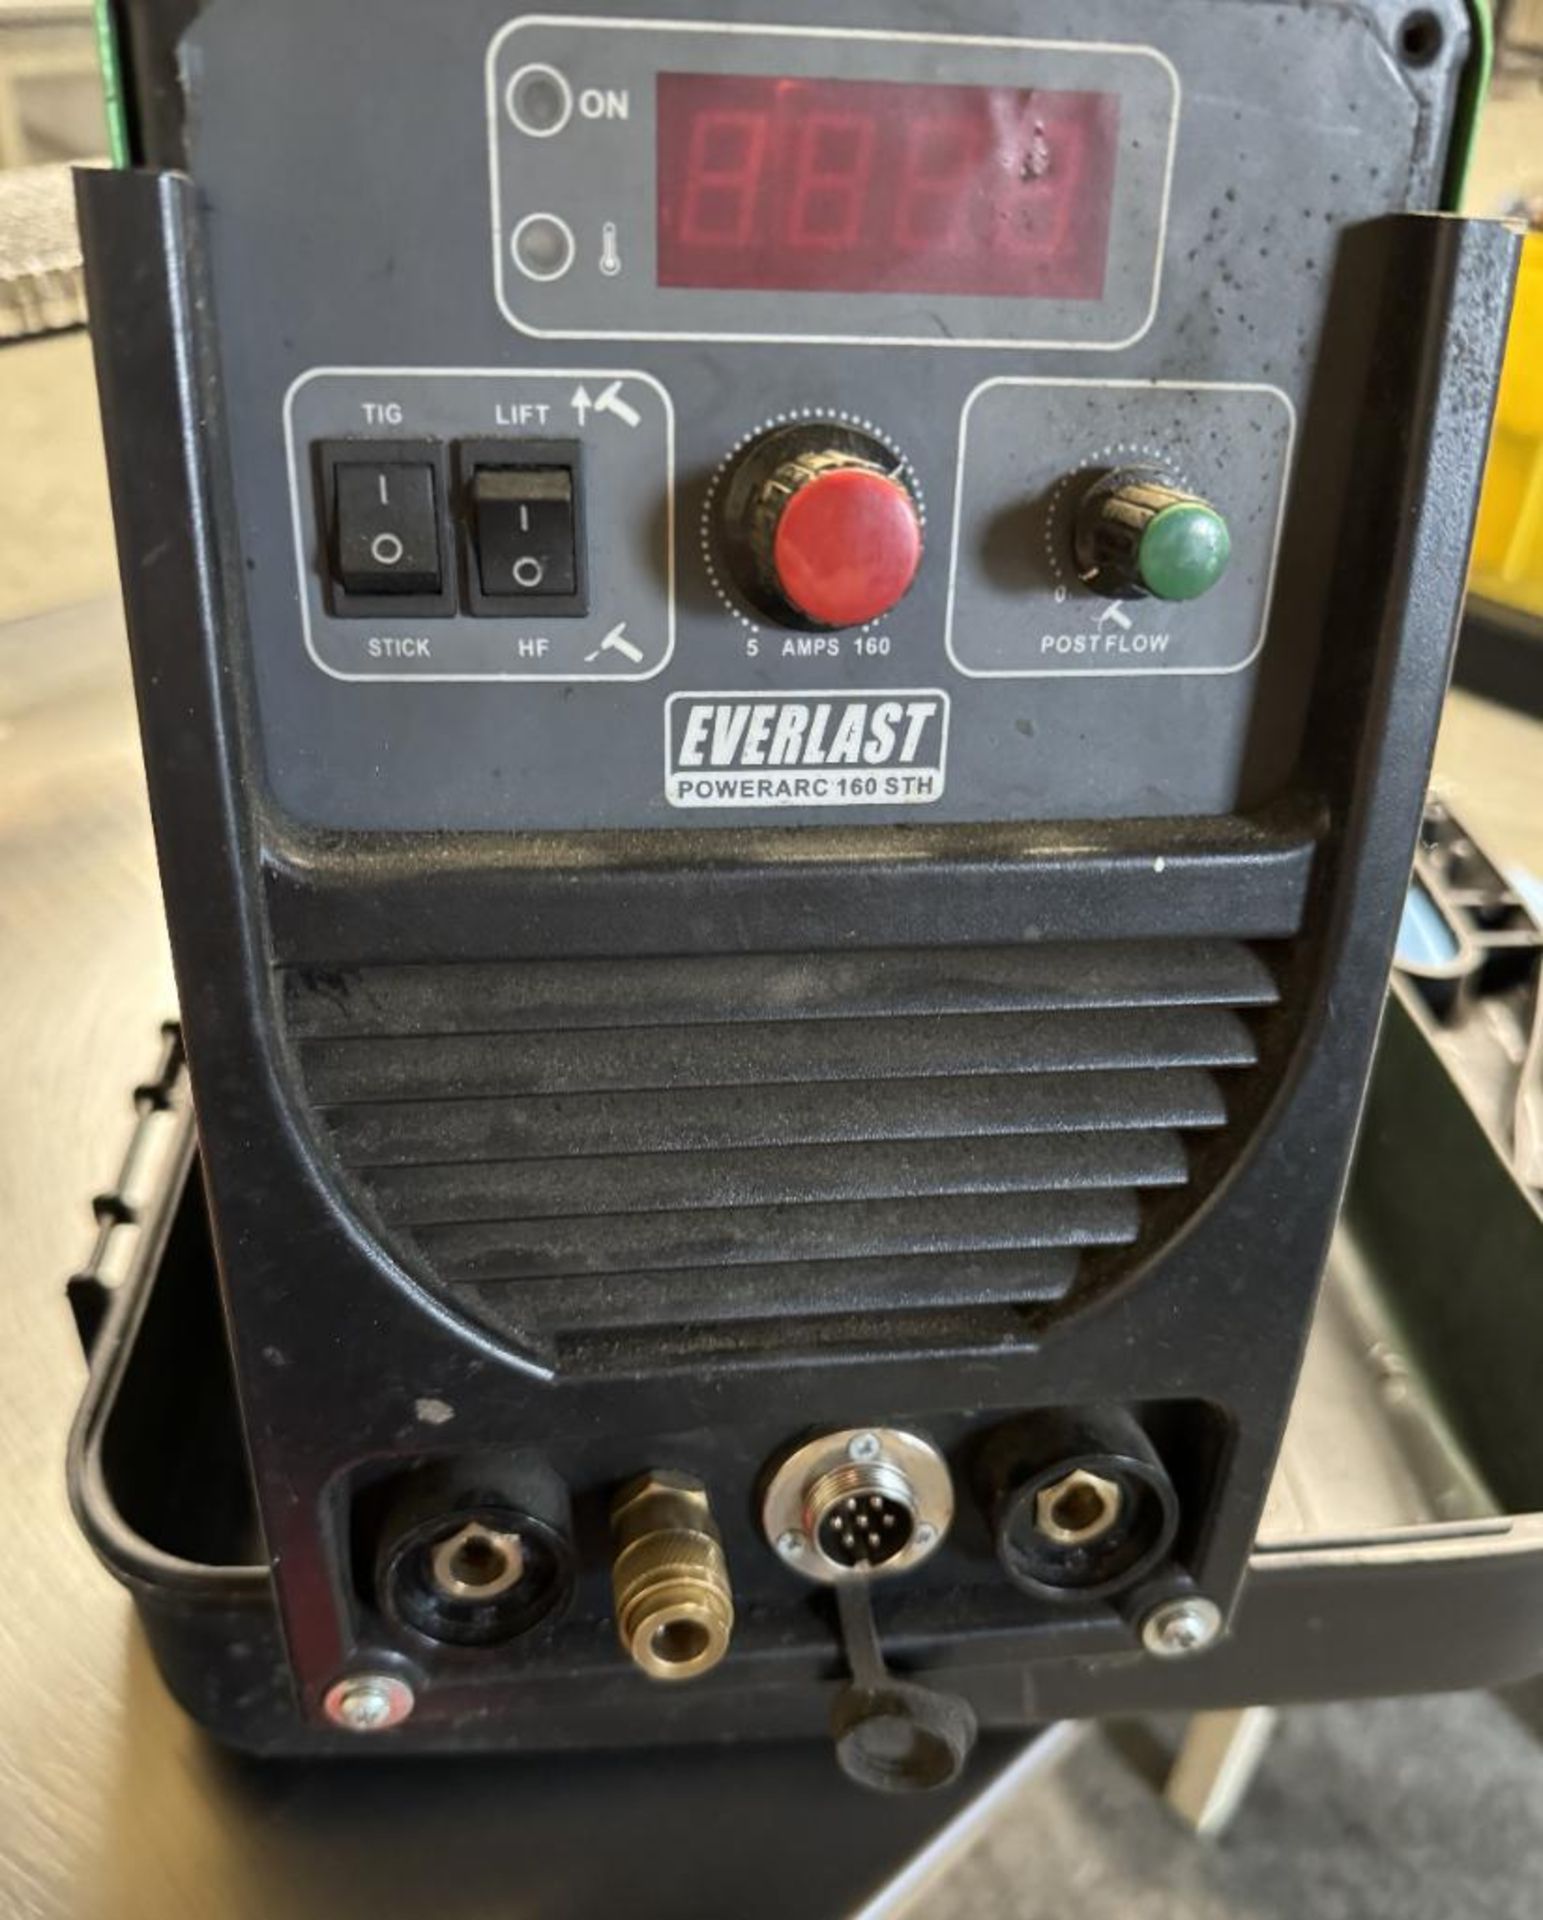 Everlast Powerarc 160 STH DC Tig Welding Machine, Serial# 035807333. - Image 4 of 5